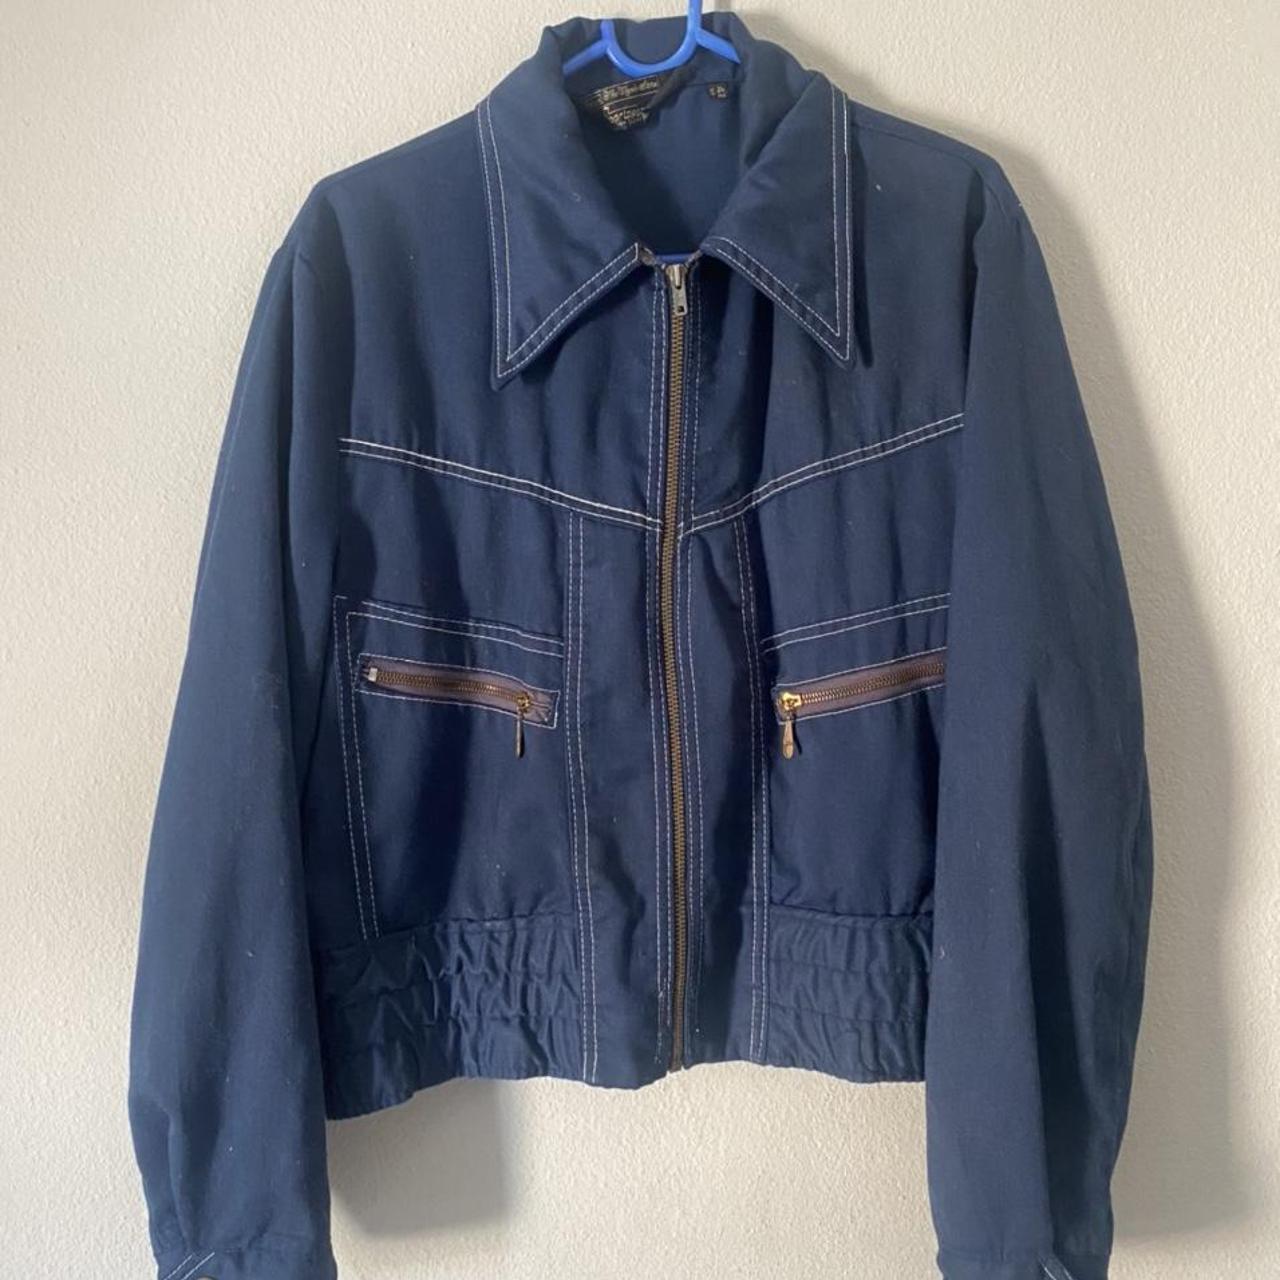 Unisex Large Sears Sportswear Vintage 70s Blue Utility Jacket